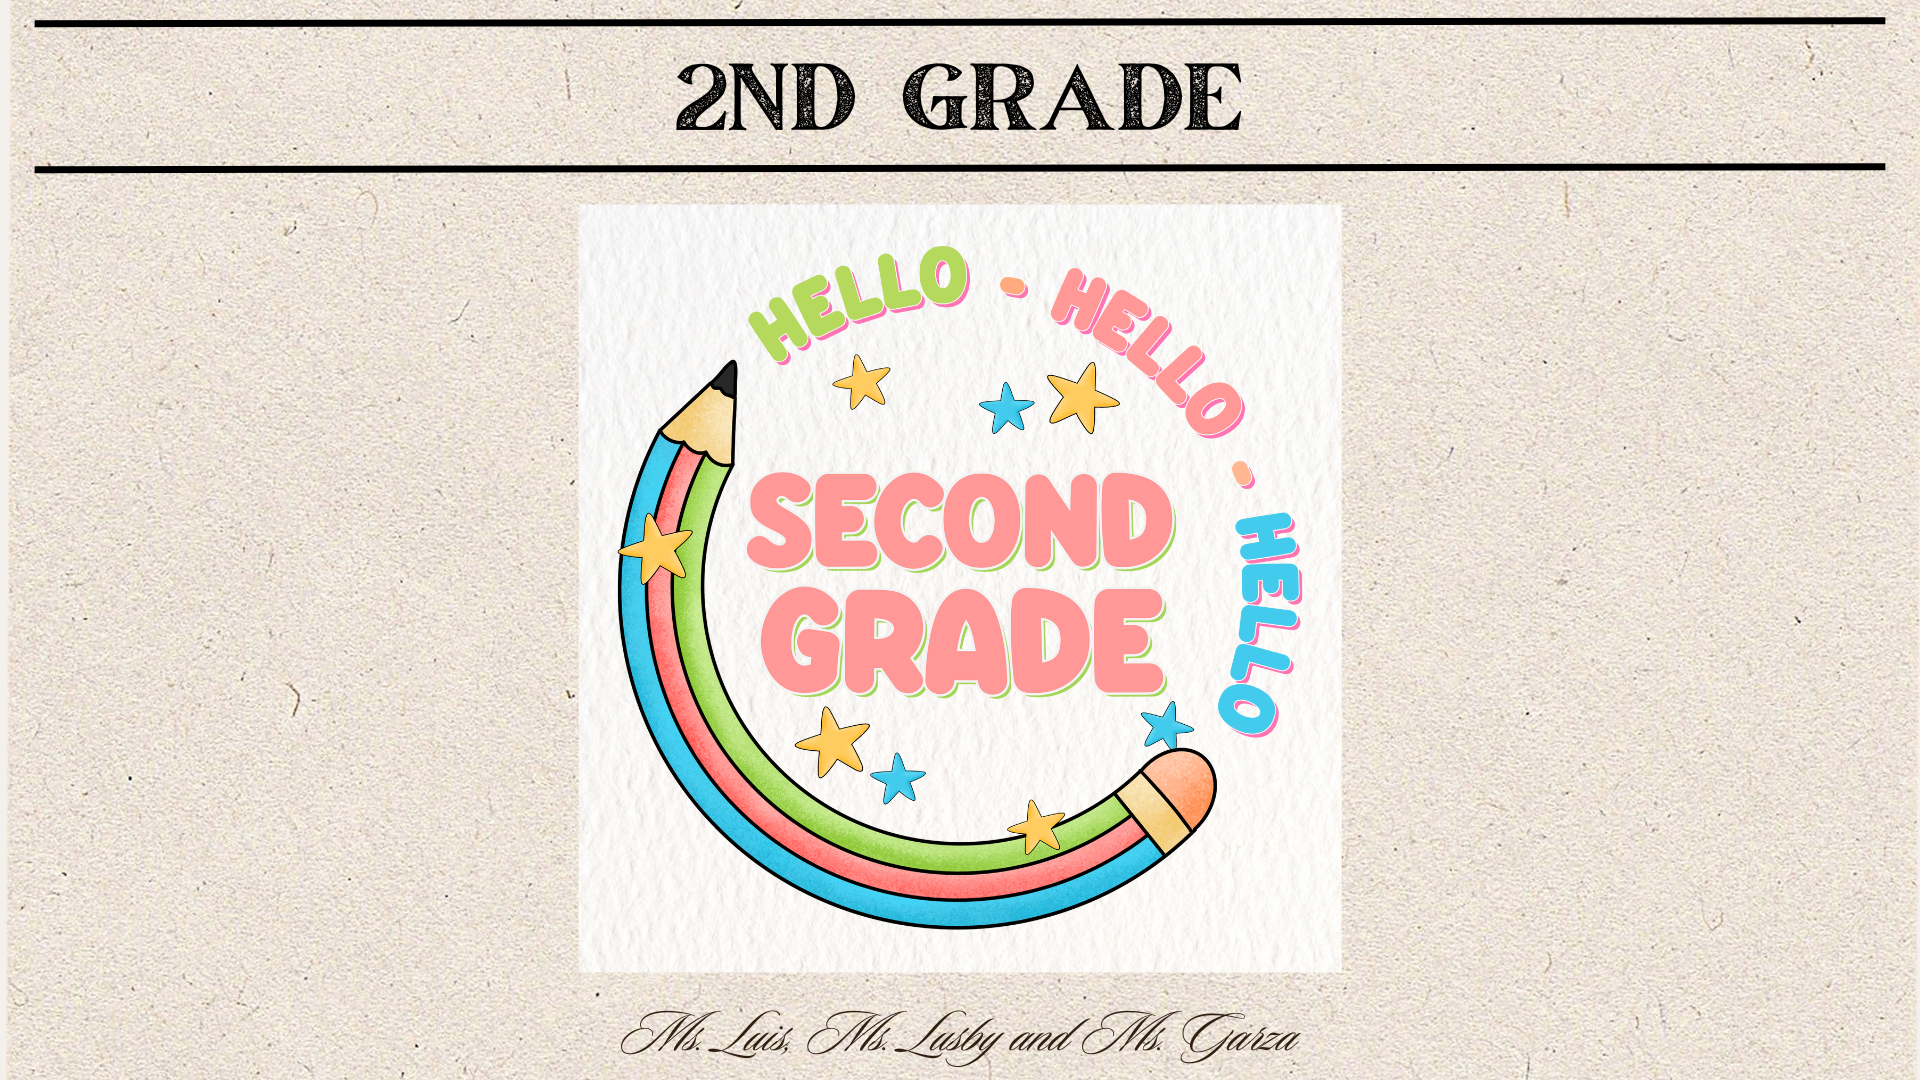 image showing Hello second grade